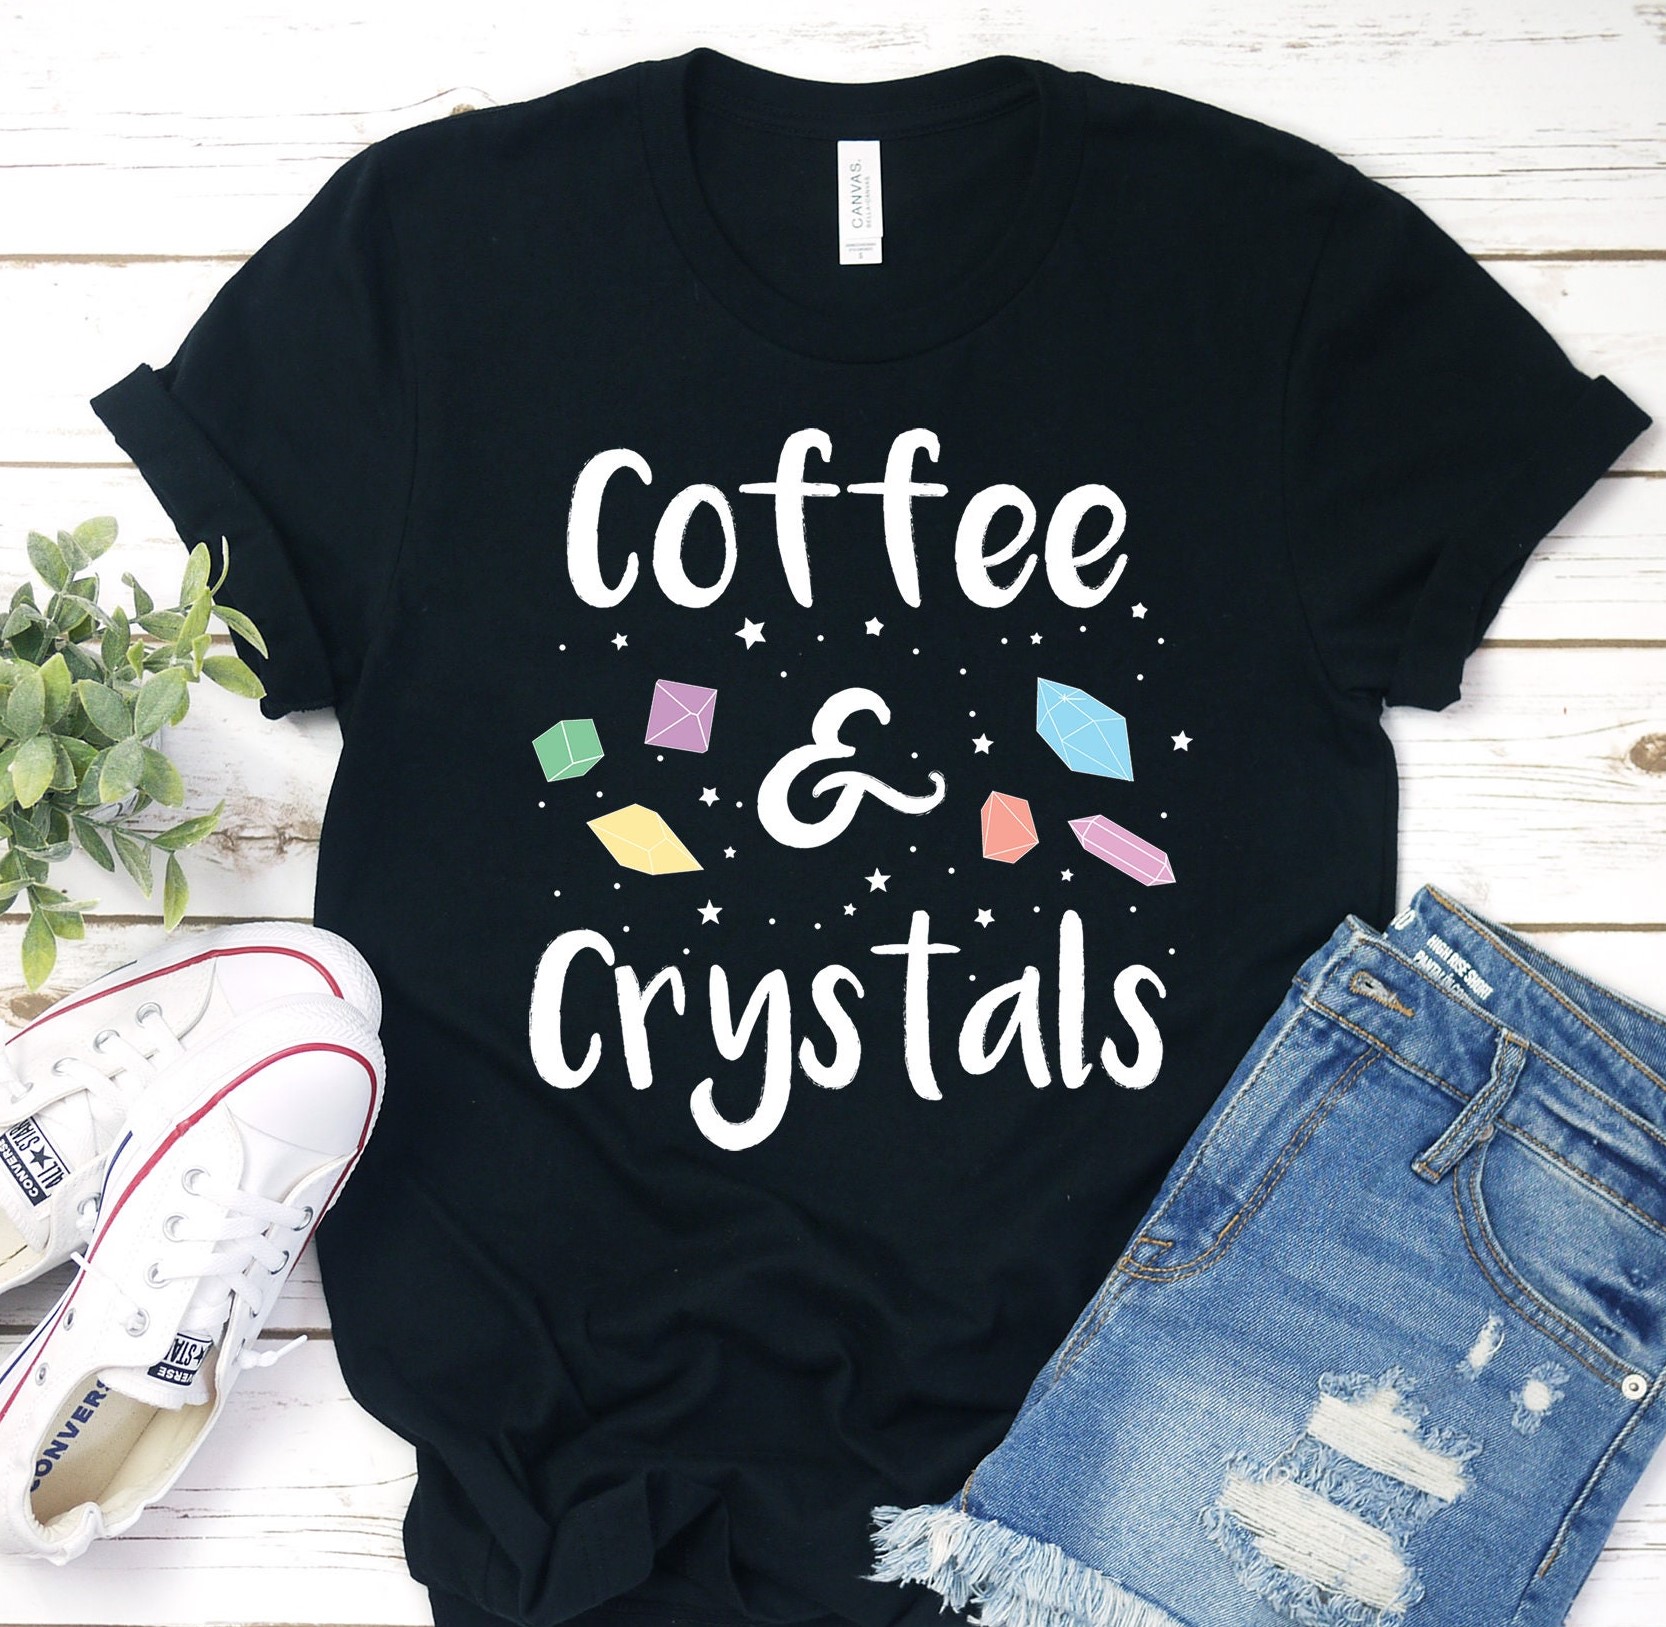 Crystal & Coffee Lovers Unisex T-Shirt